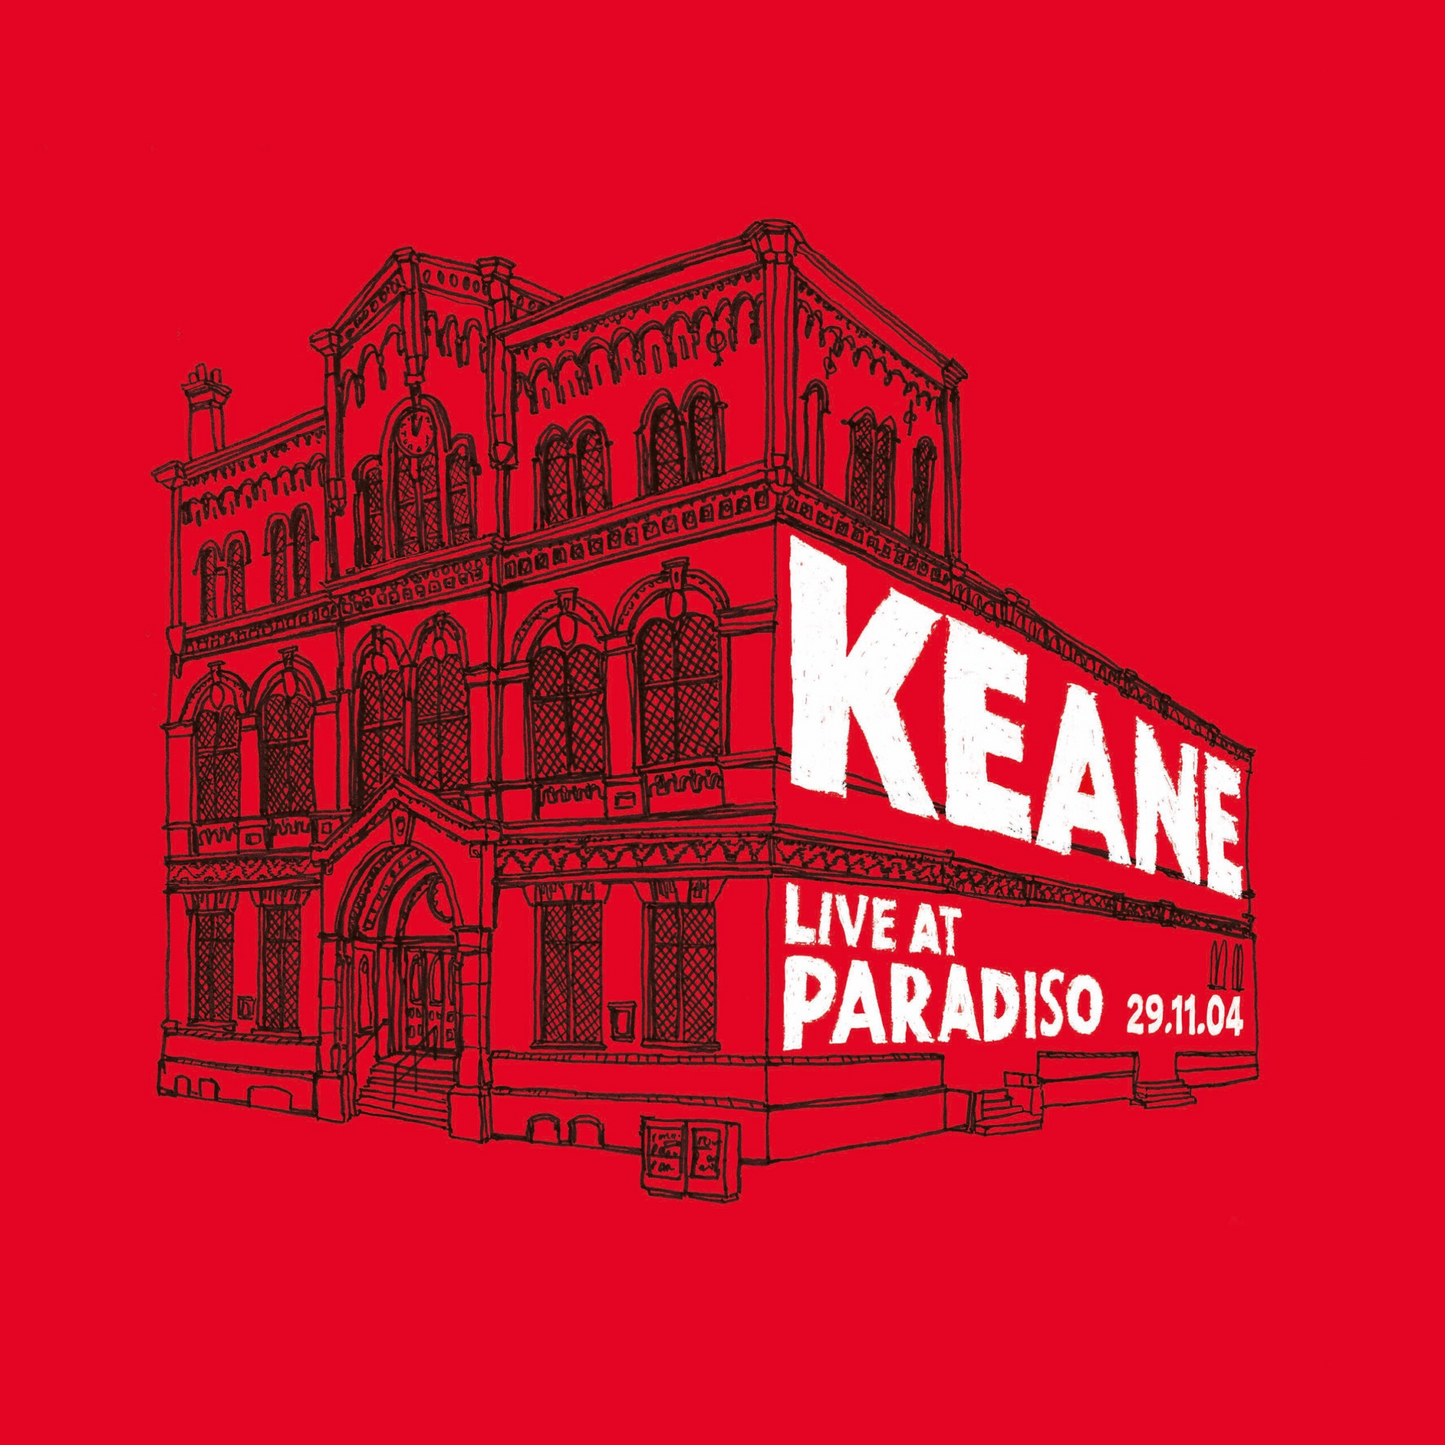 Keane Live At Paradiso RSD 2024 Importado Red & White Lp Vinyl